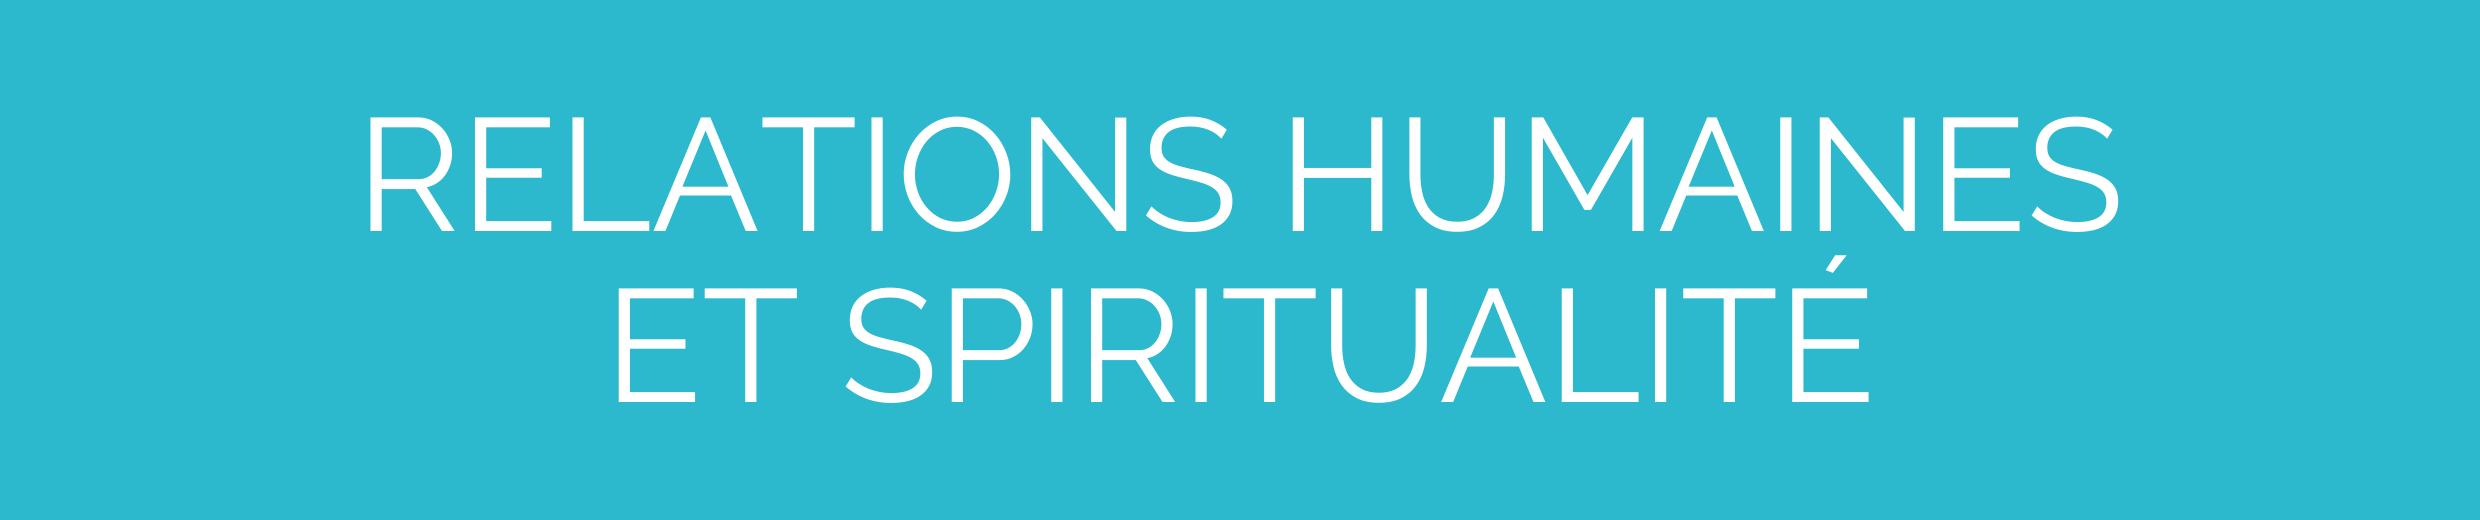 Relations humaines et spiritualité